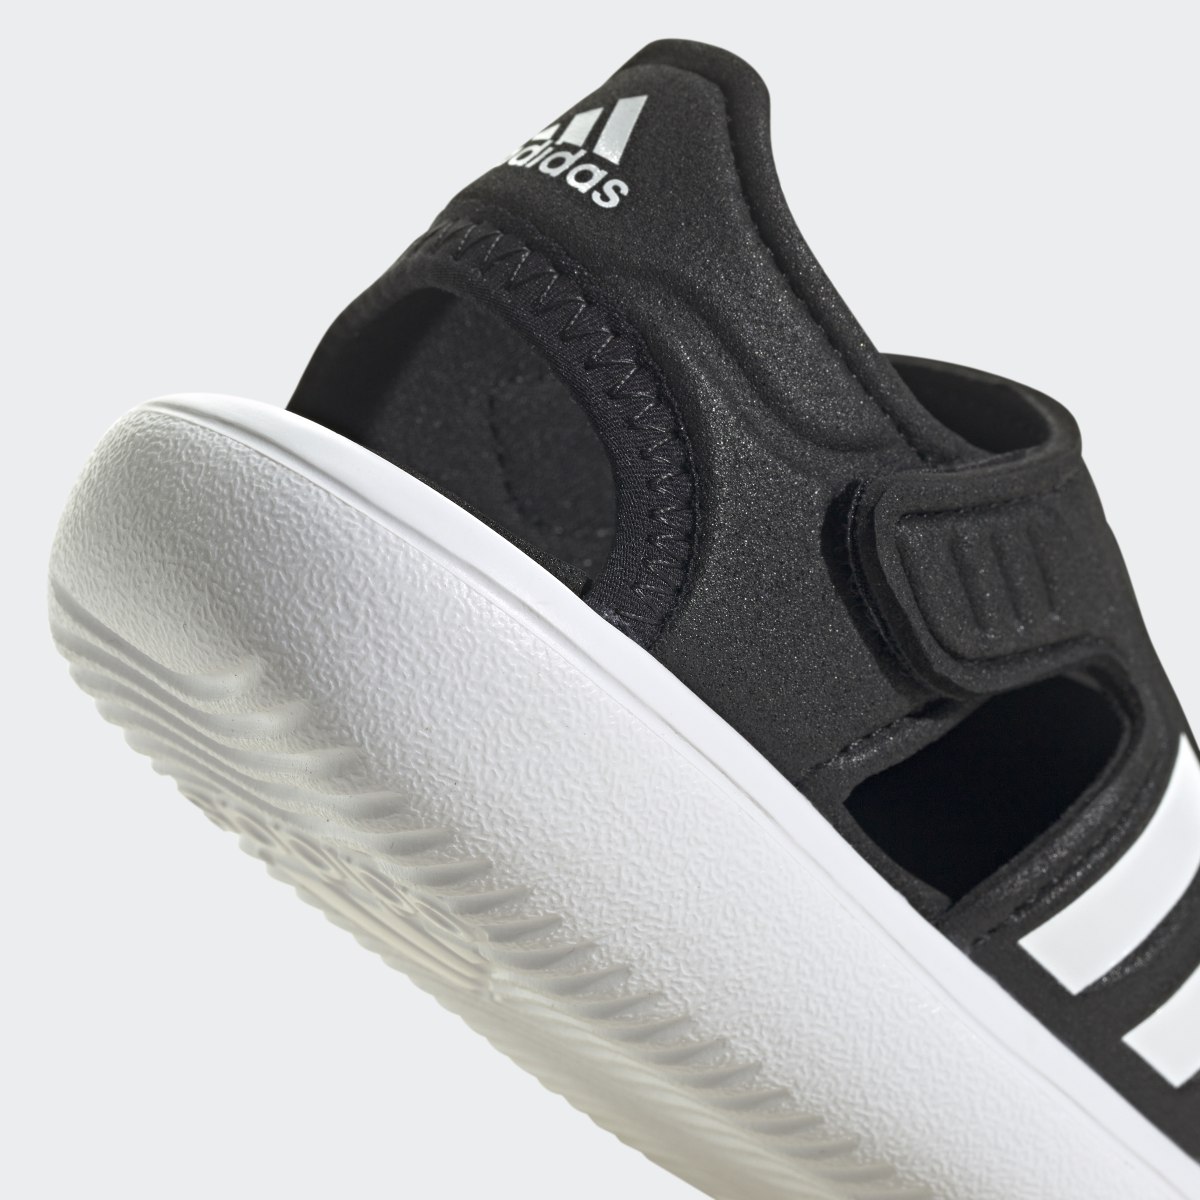 Adidas Closed-Toe Summer Water Sandals. 10